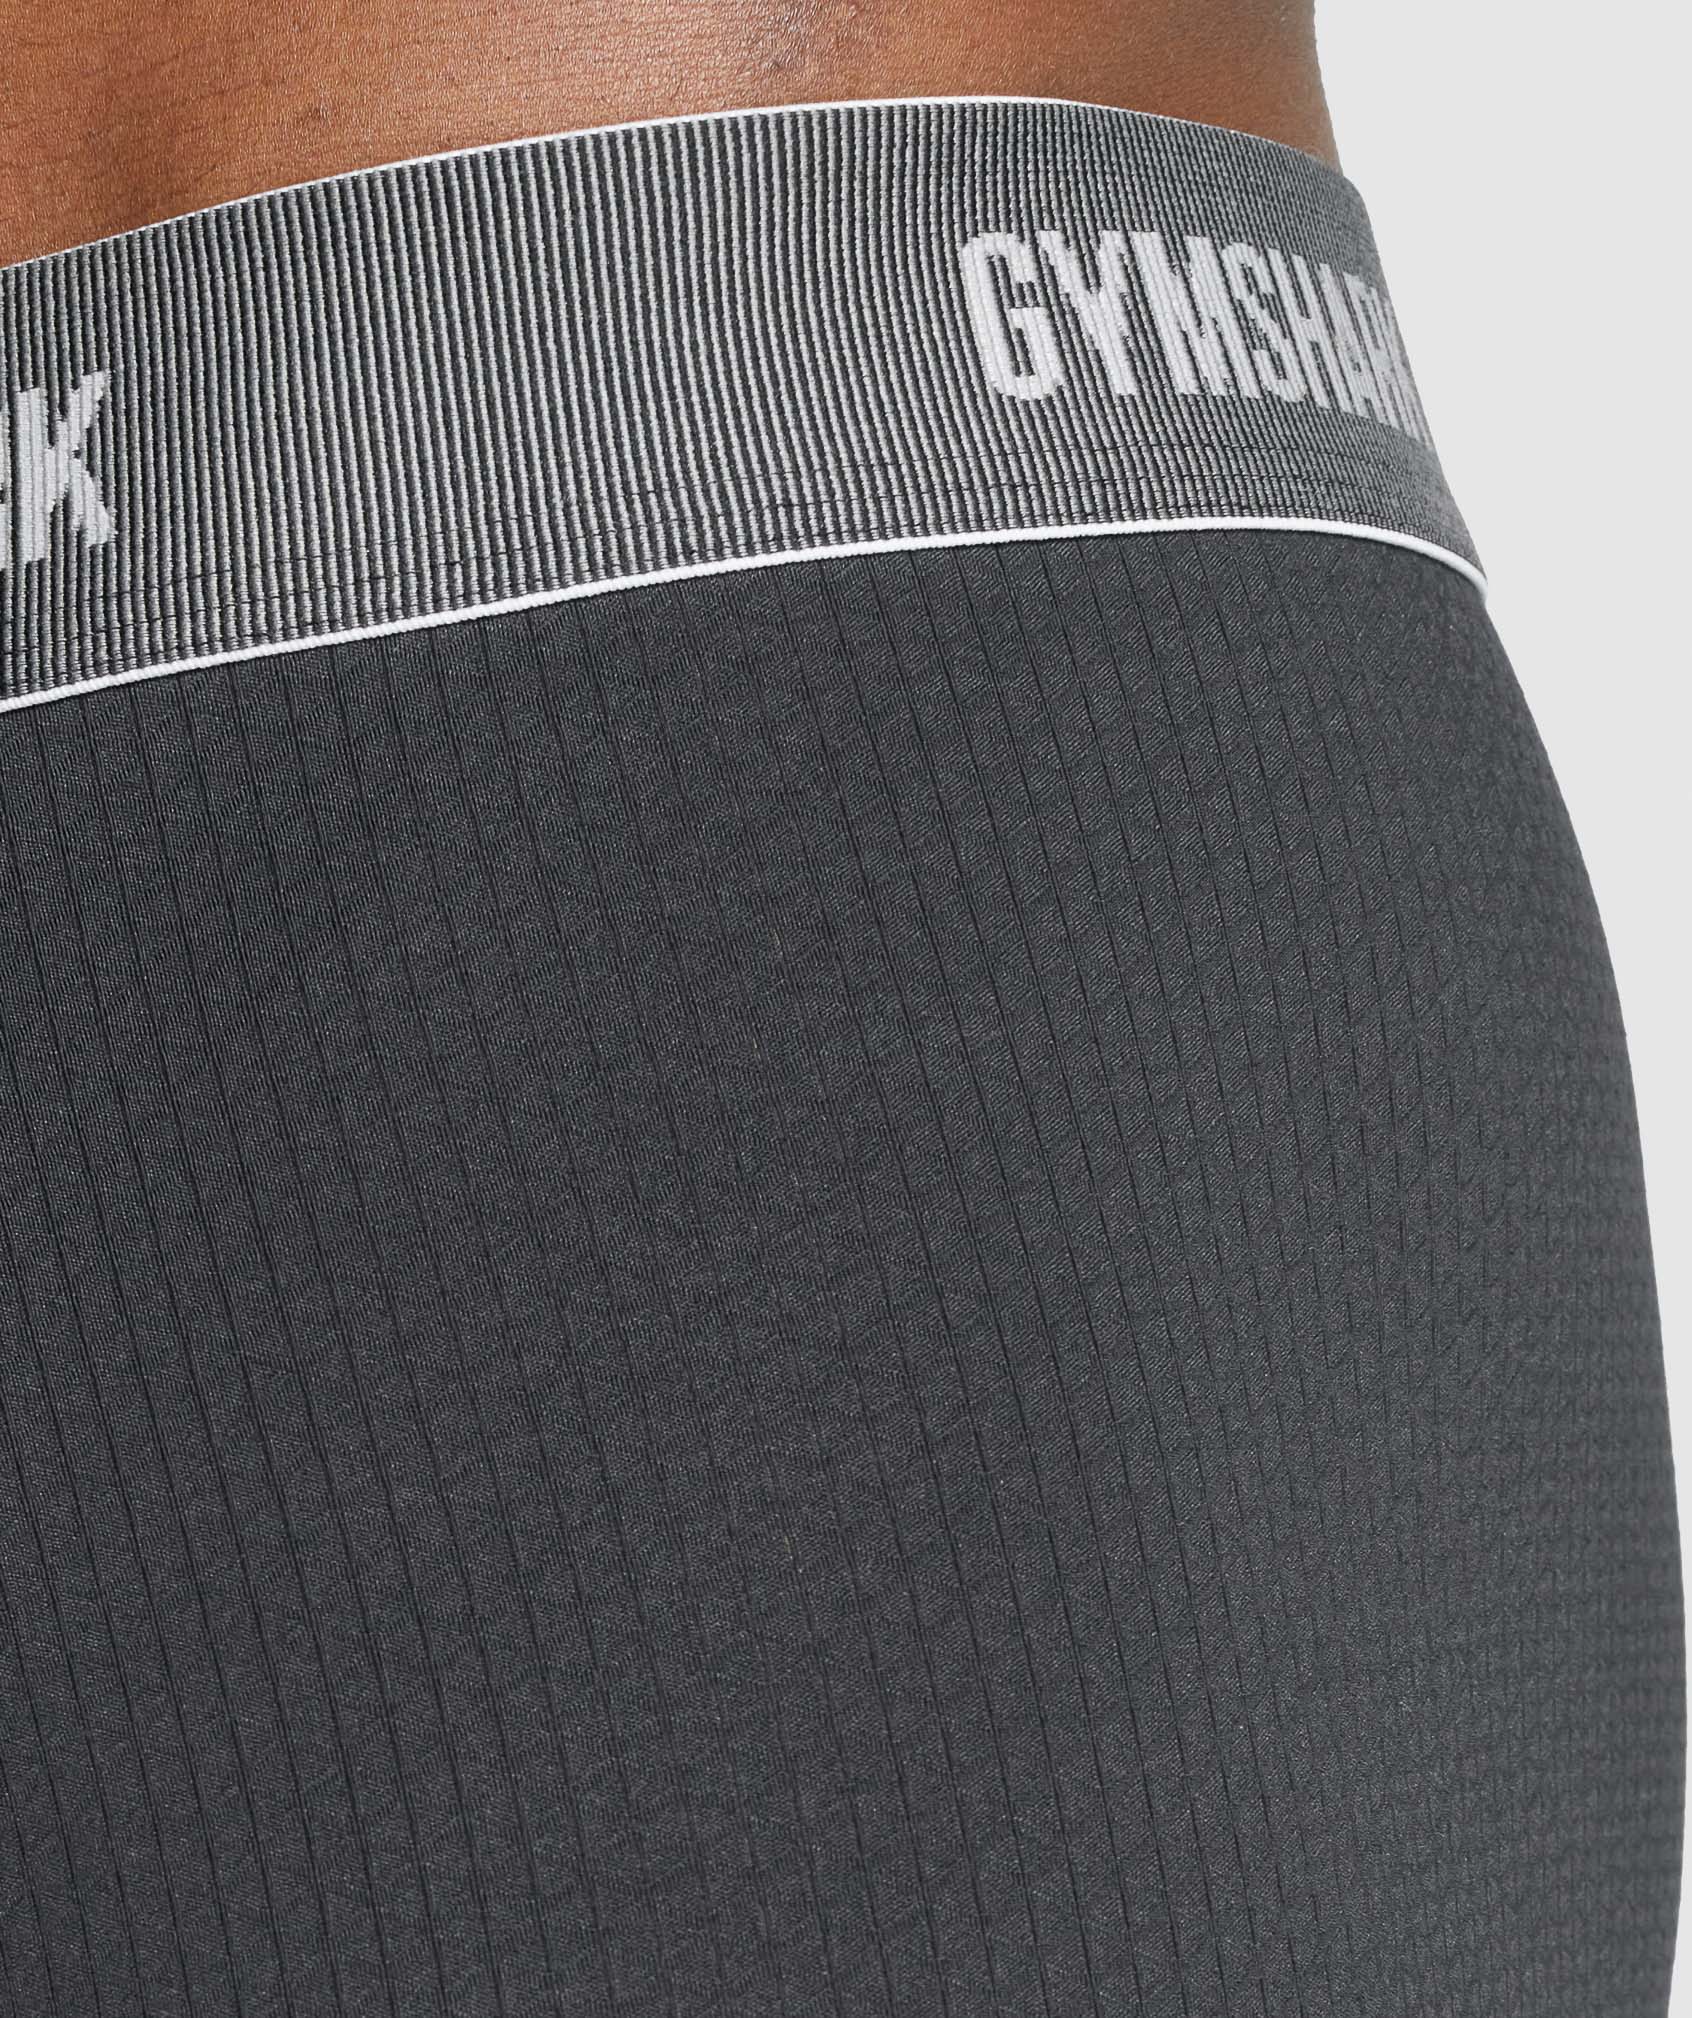 Gymshark Men's Sports Tech Boxers 3 Pack, Black / Core Green